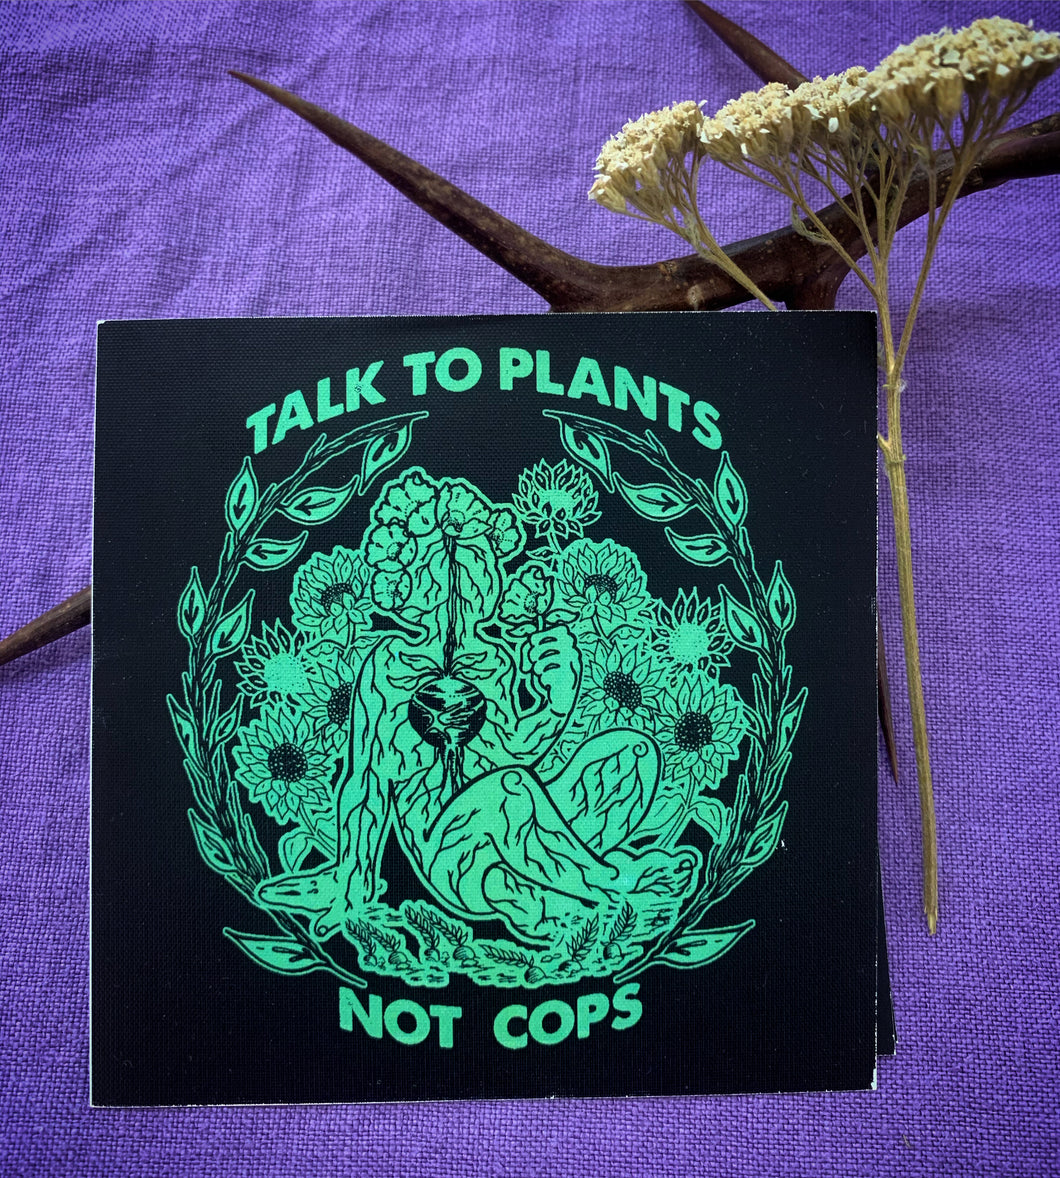 Talk to Plants Not Cops sticker